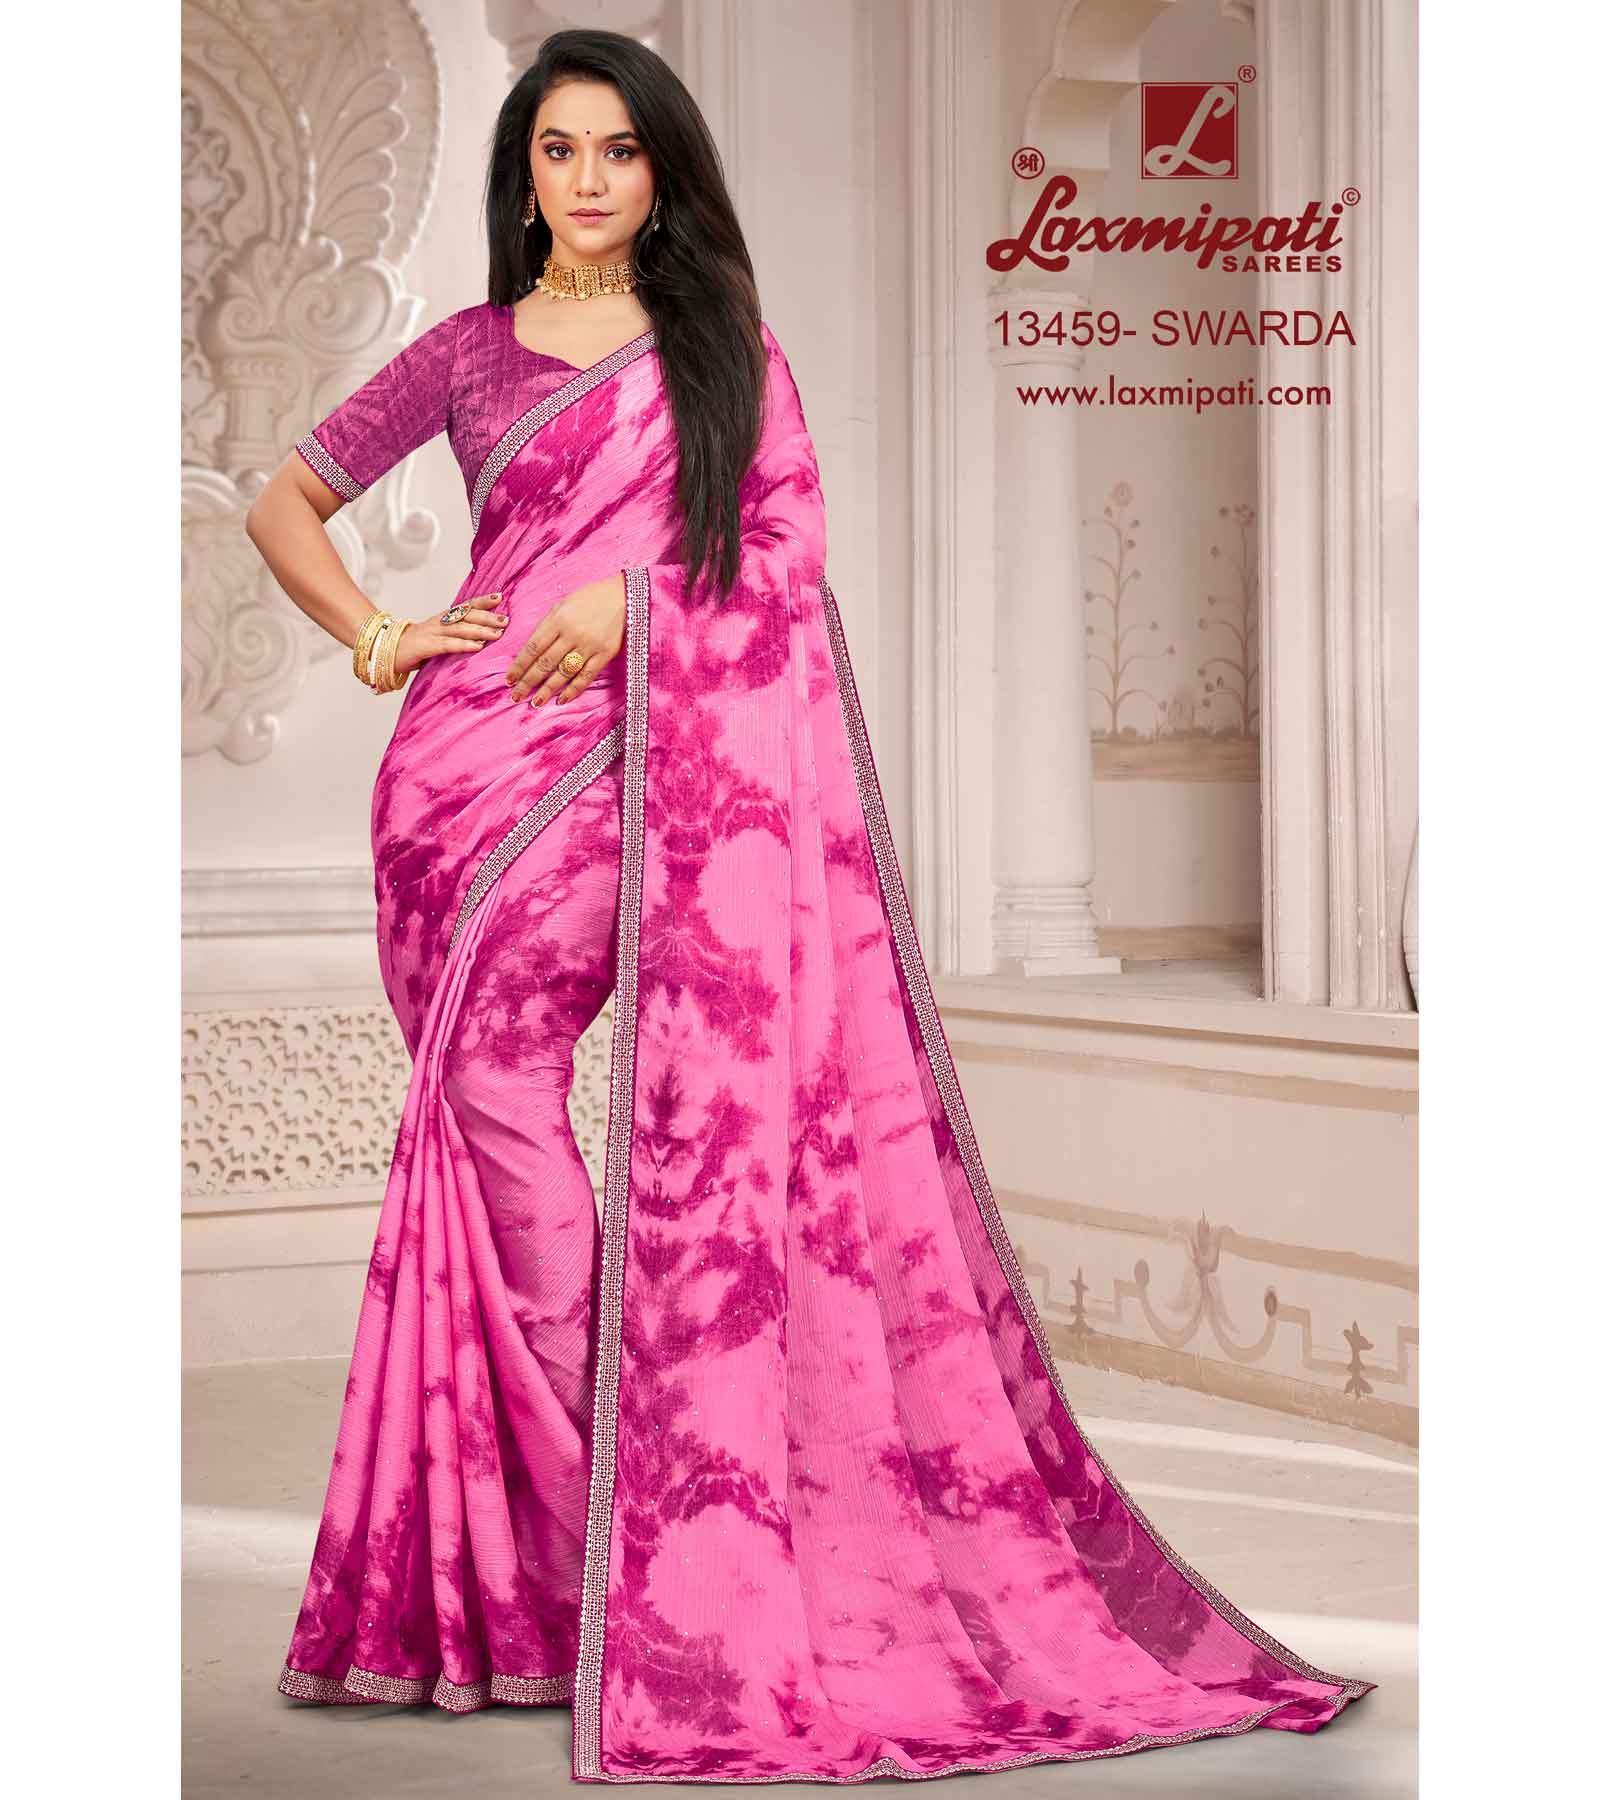 Laxmipati sarees rangrachi 5598-5609 fancy georgette printed saree  catalogue from surat dealer best price